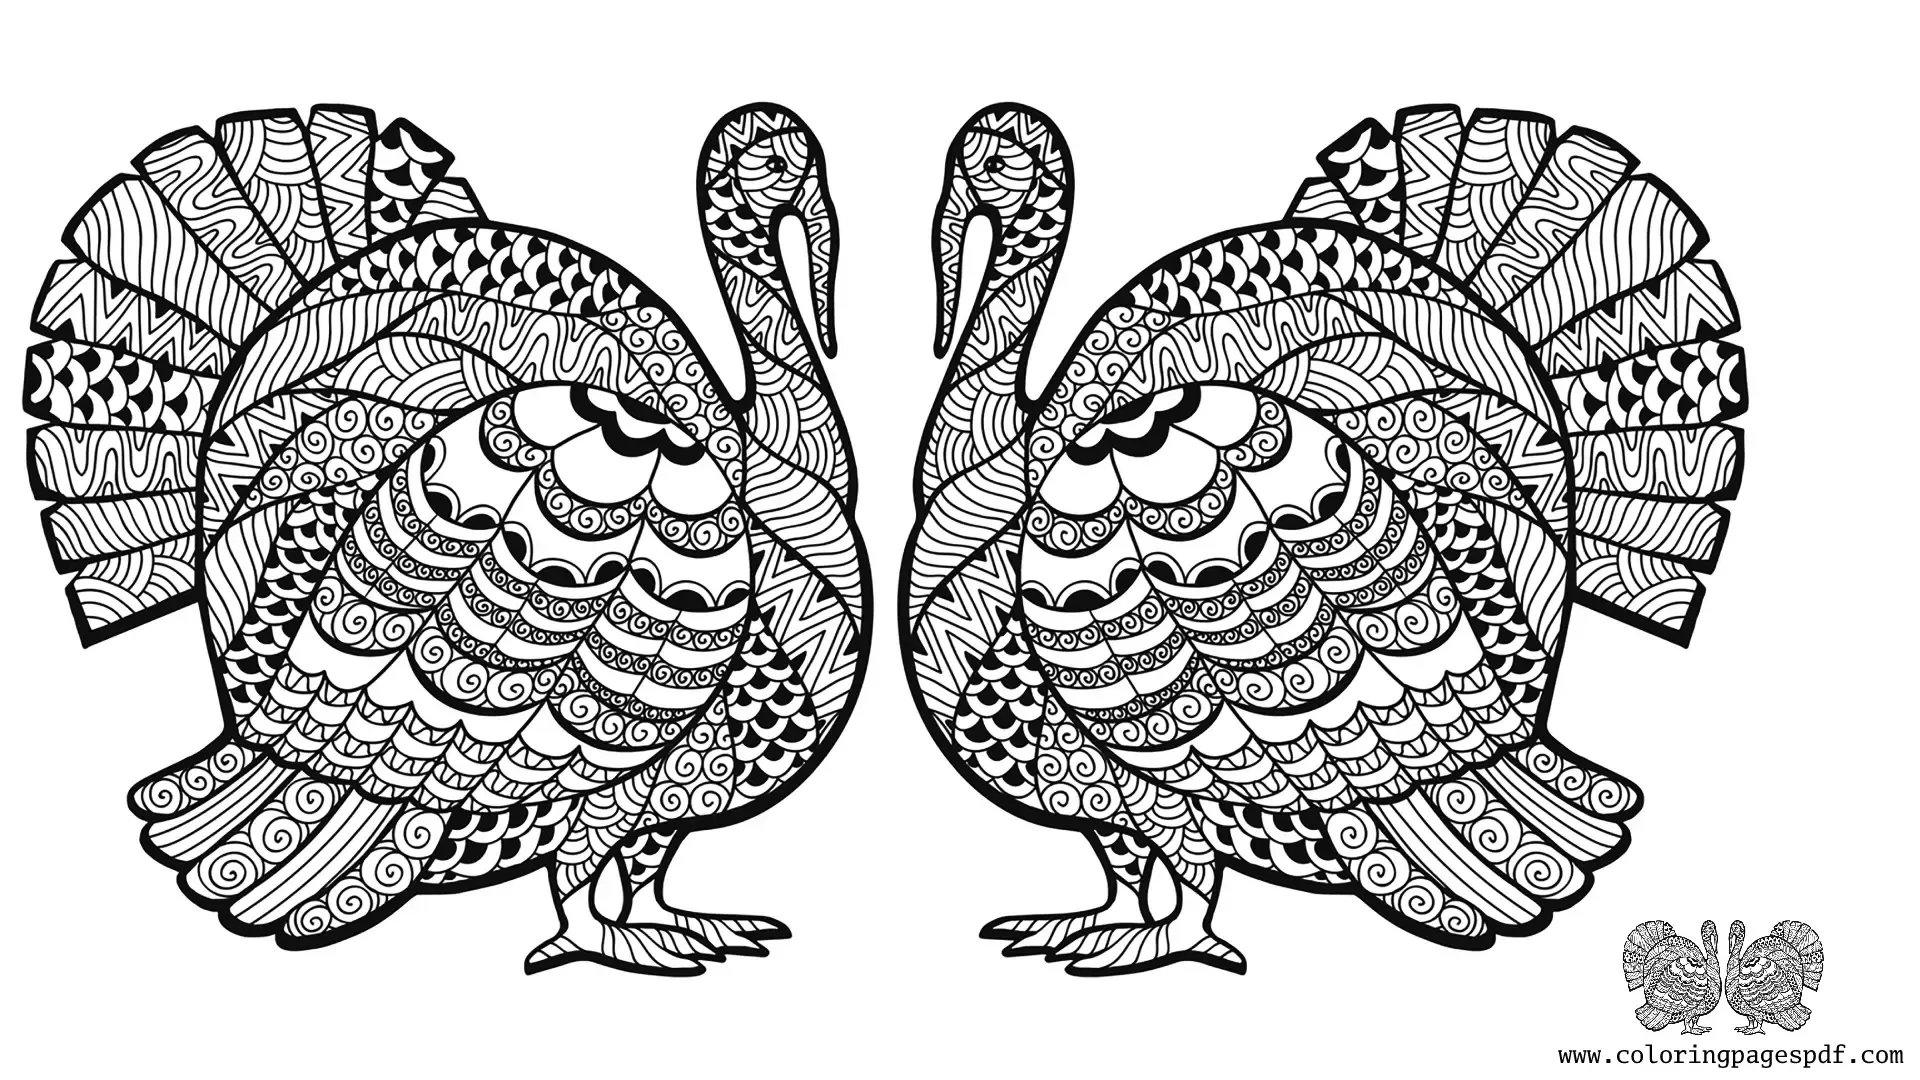 Coloring Page Of Two Turkeys Mandala